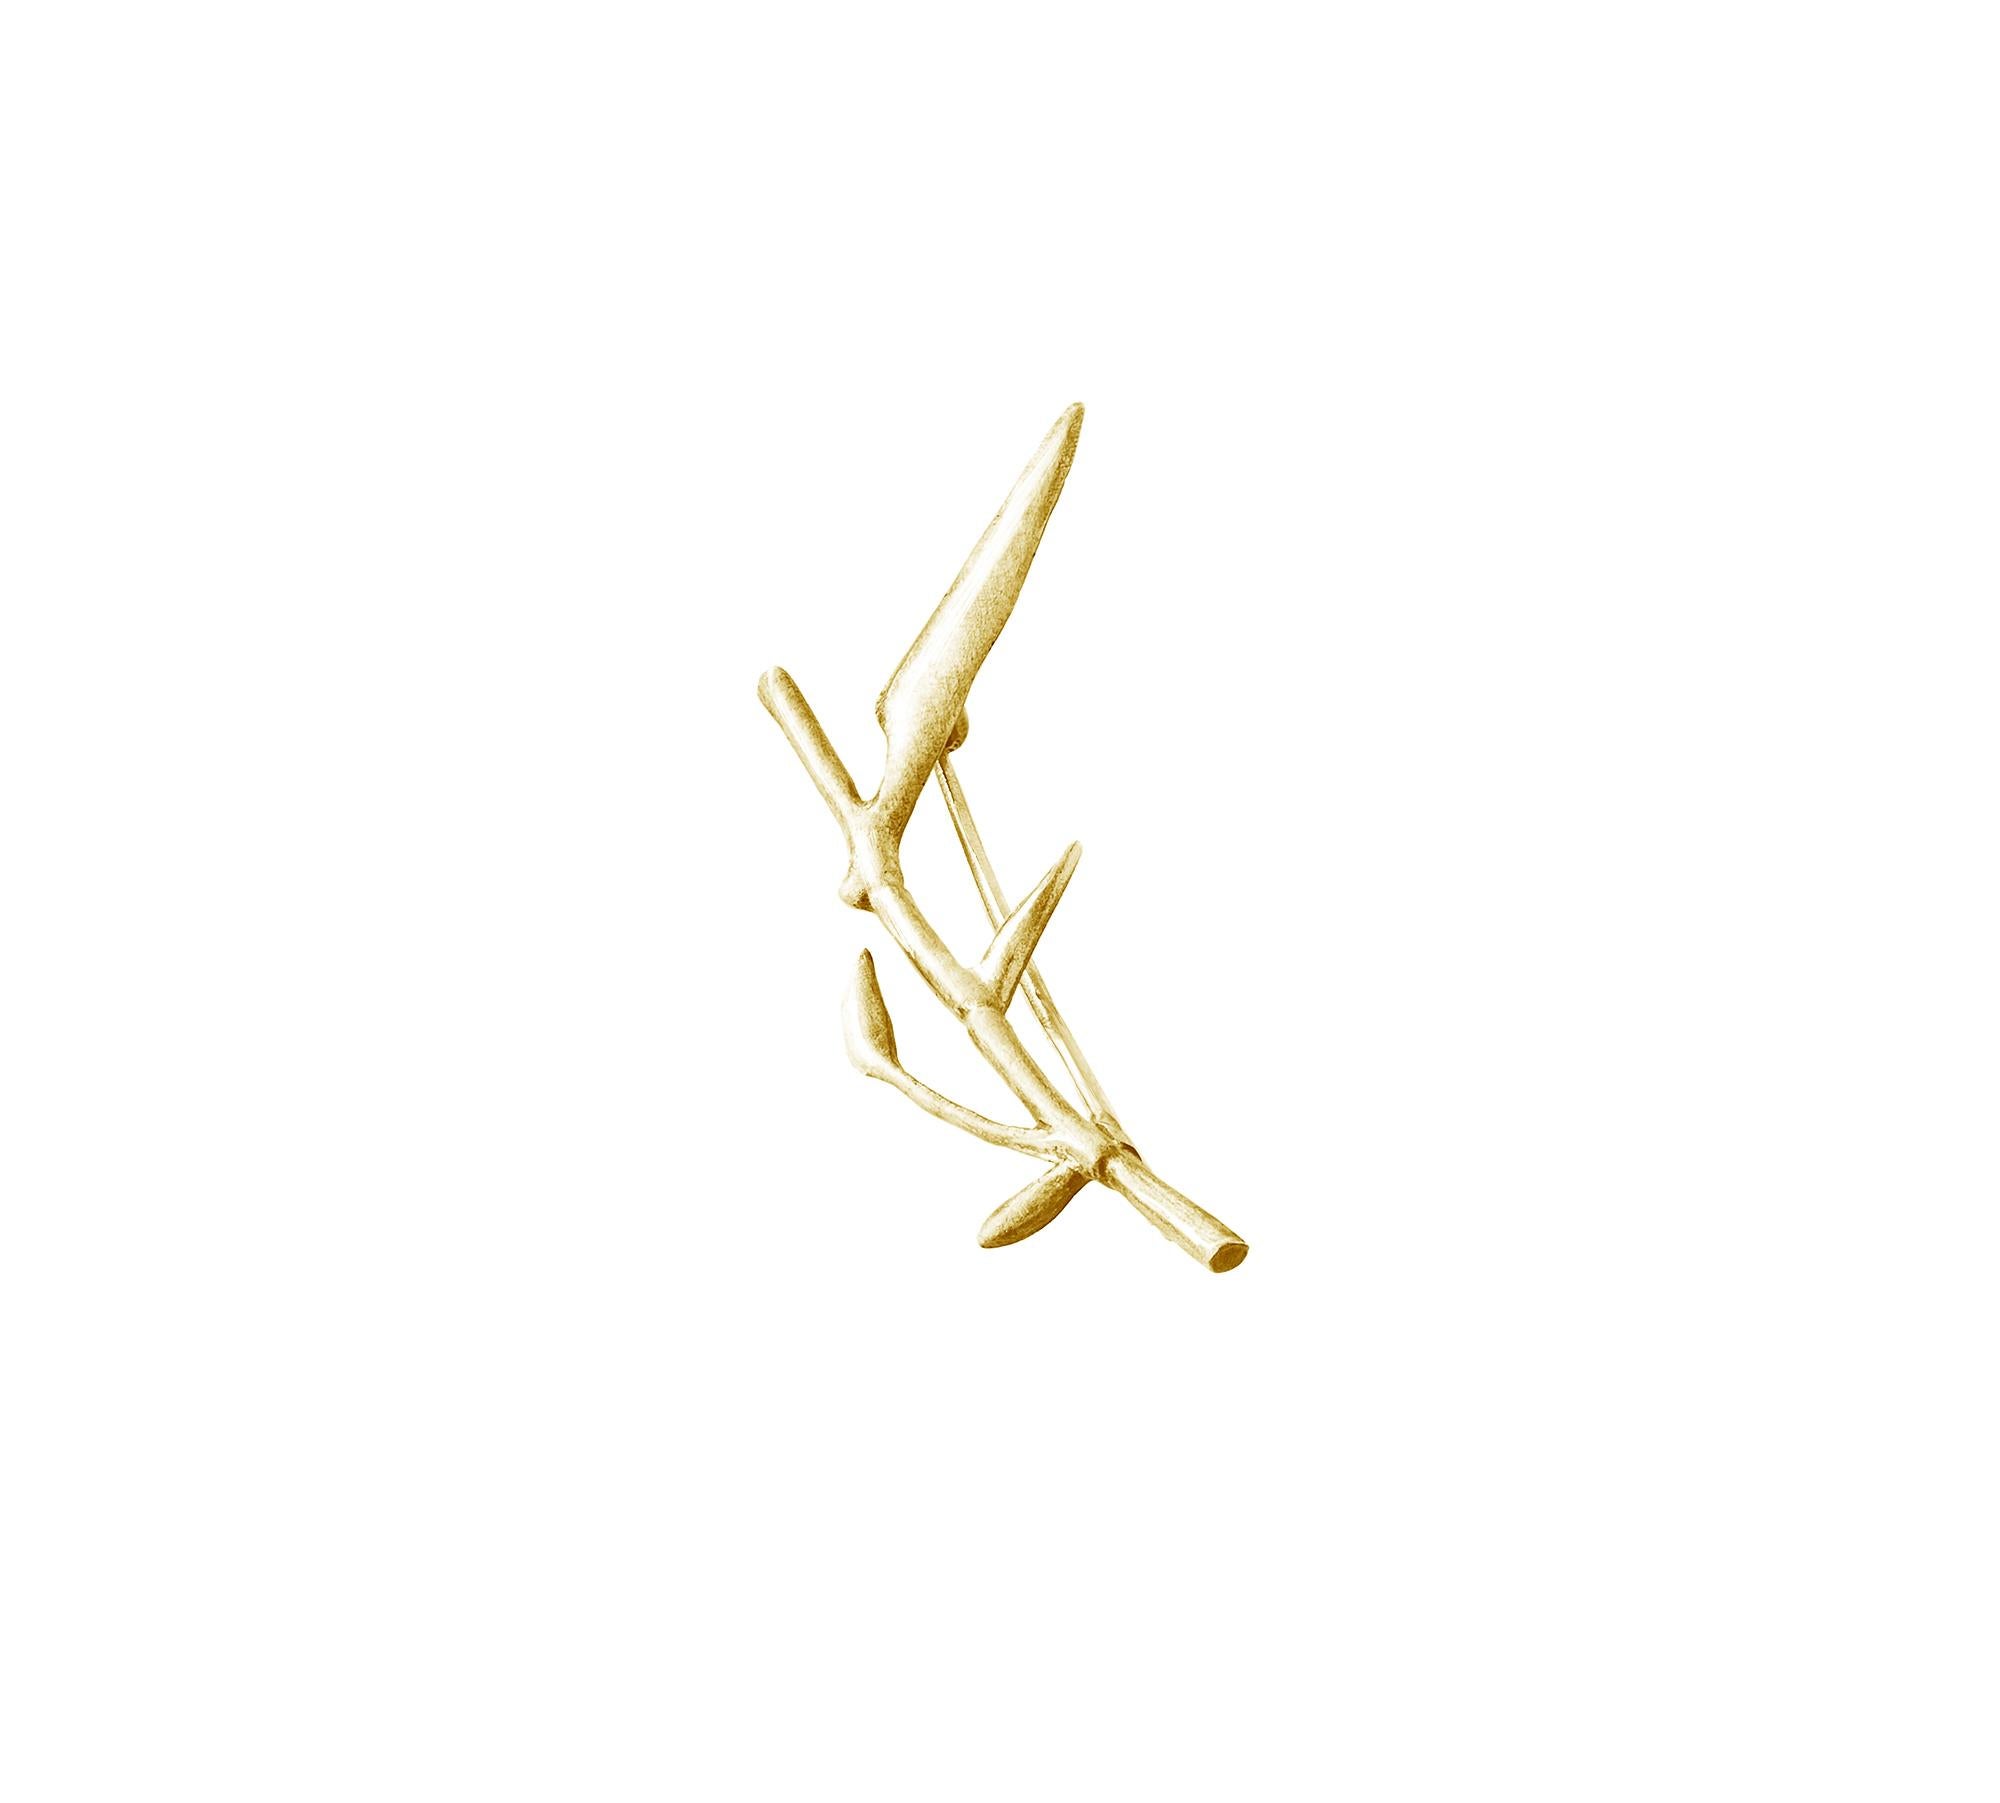 Featured in Vogue Bamboo Garden Fourteen Karat Yellow Gold Diptych by the Artist For Sale 1